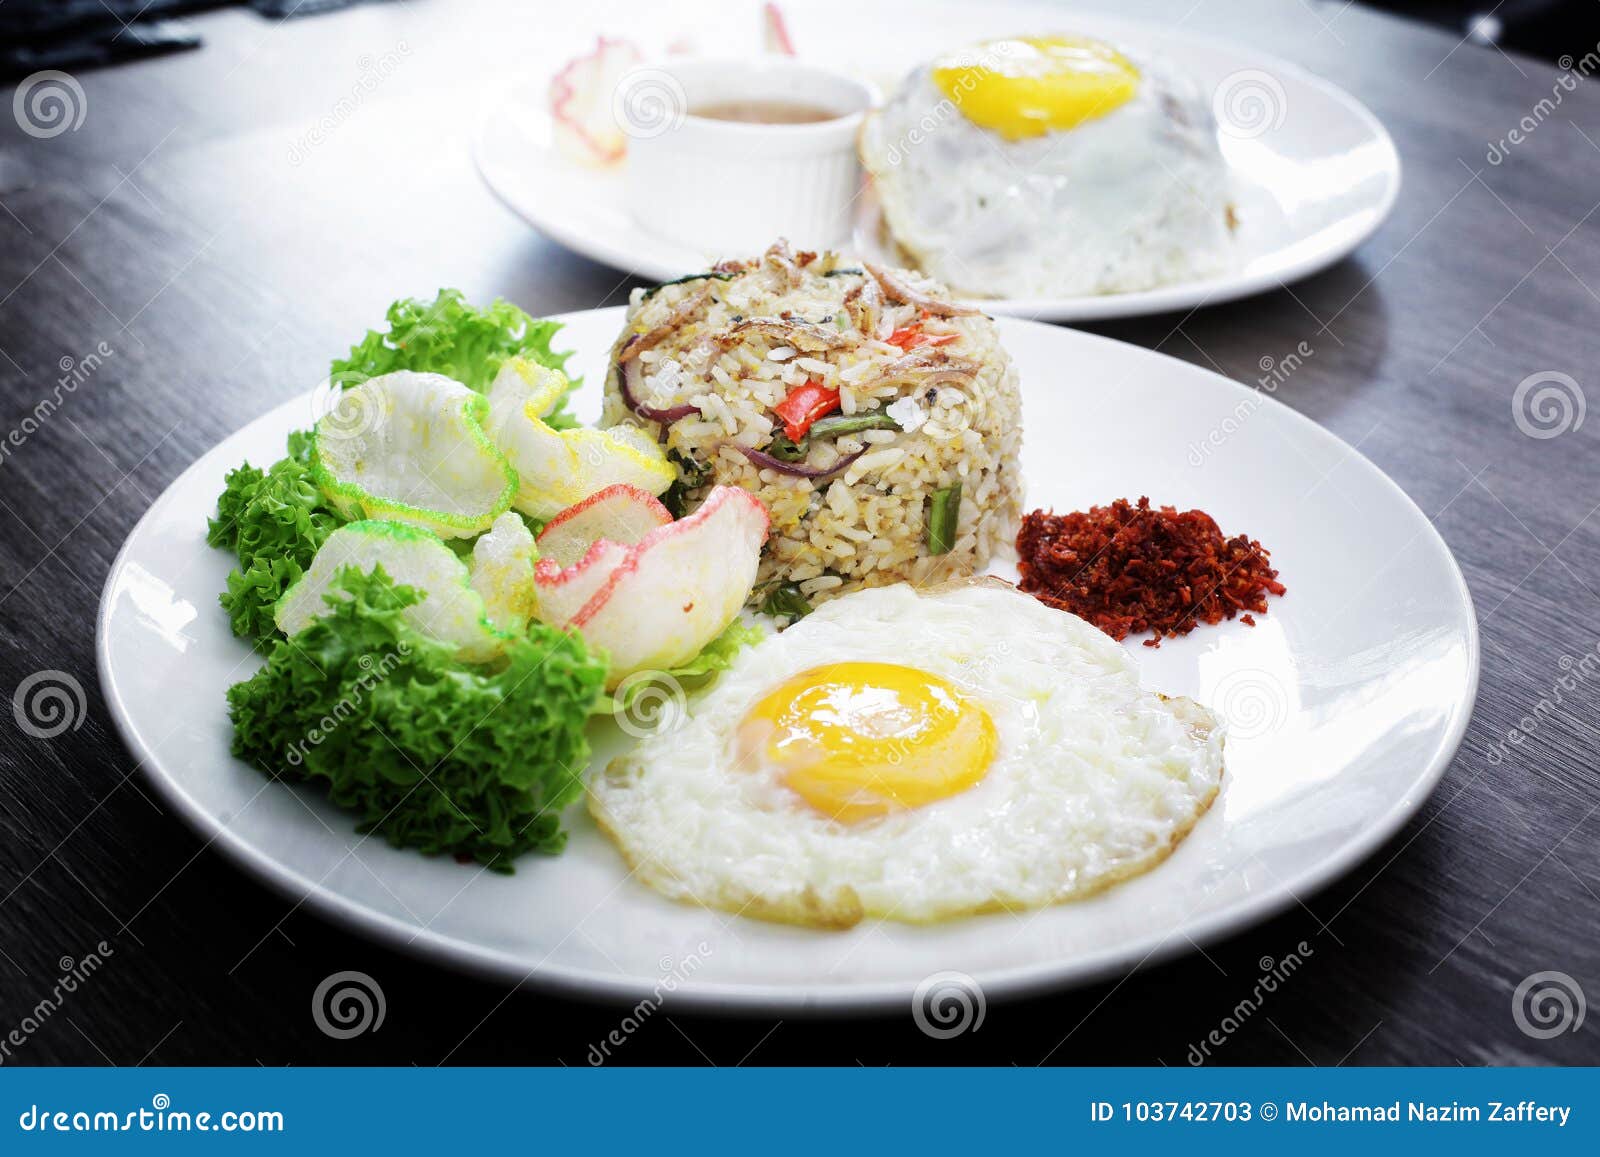 Asian Food Presentation Stock Image Image Of Fried 103742703